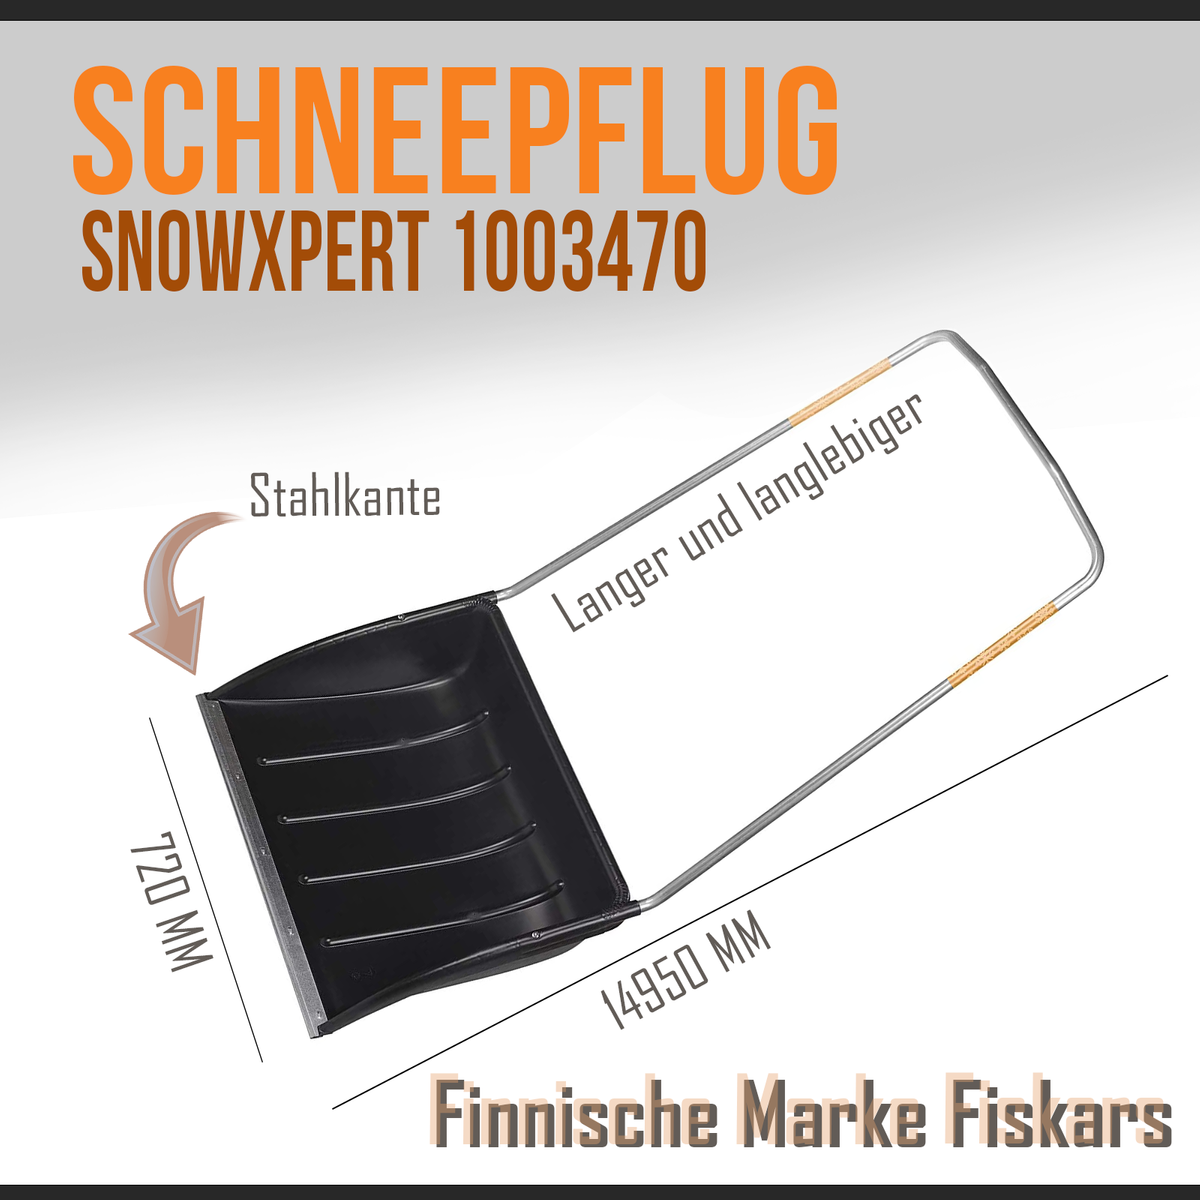 Fiskars Schneekratzer Schneepflug SnowXpert Modell 1003470 Weit